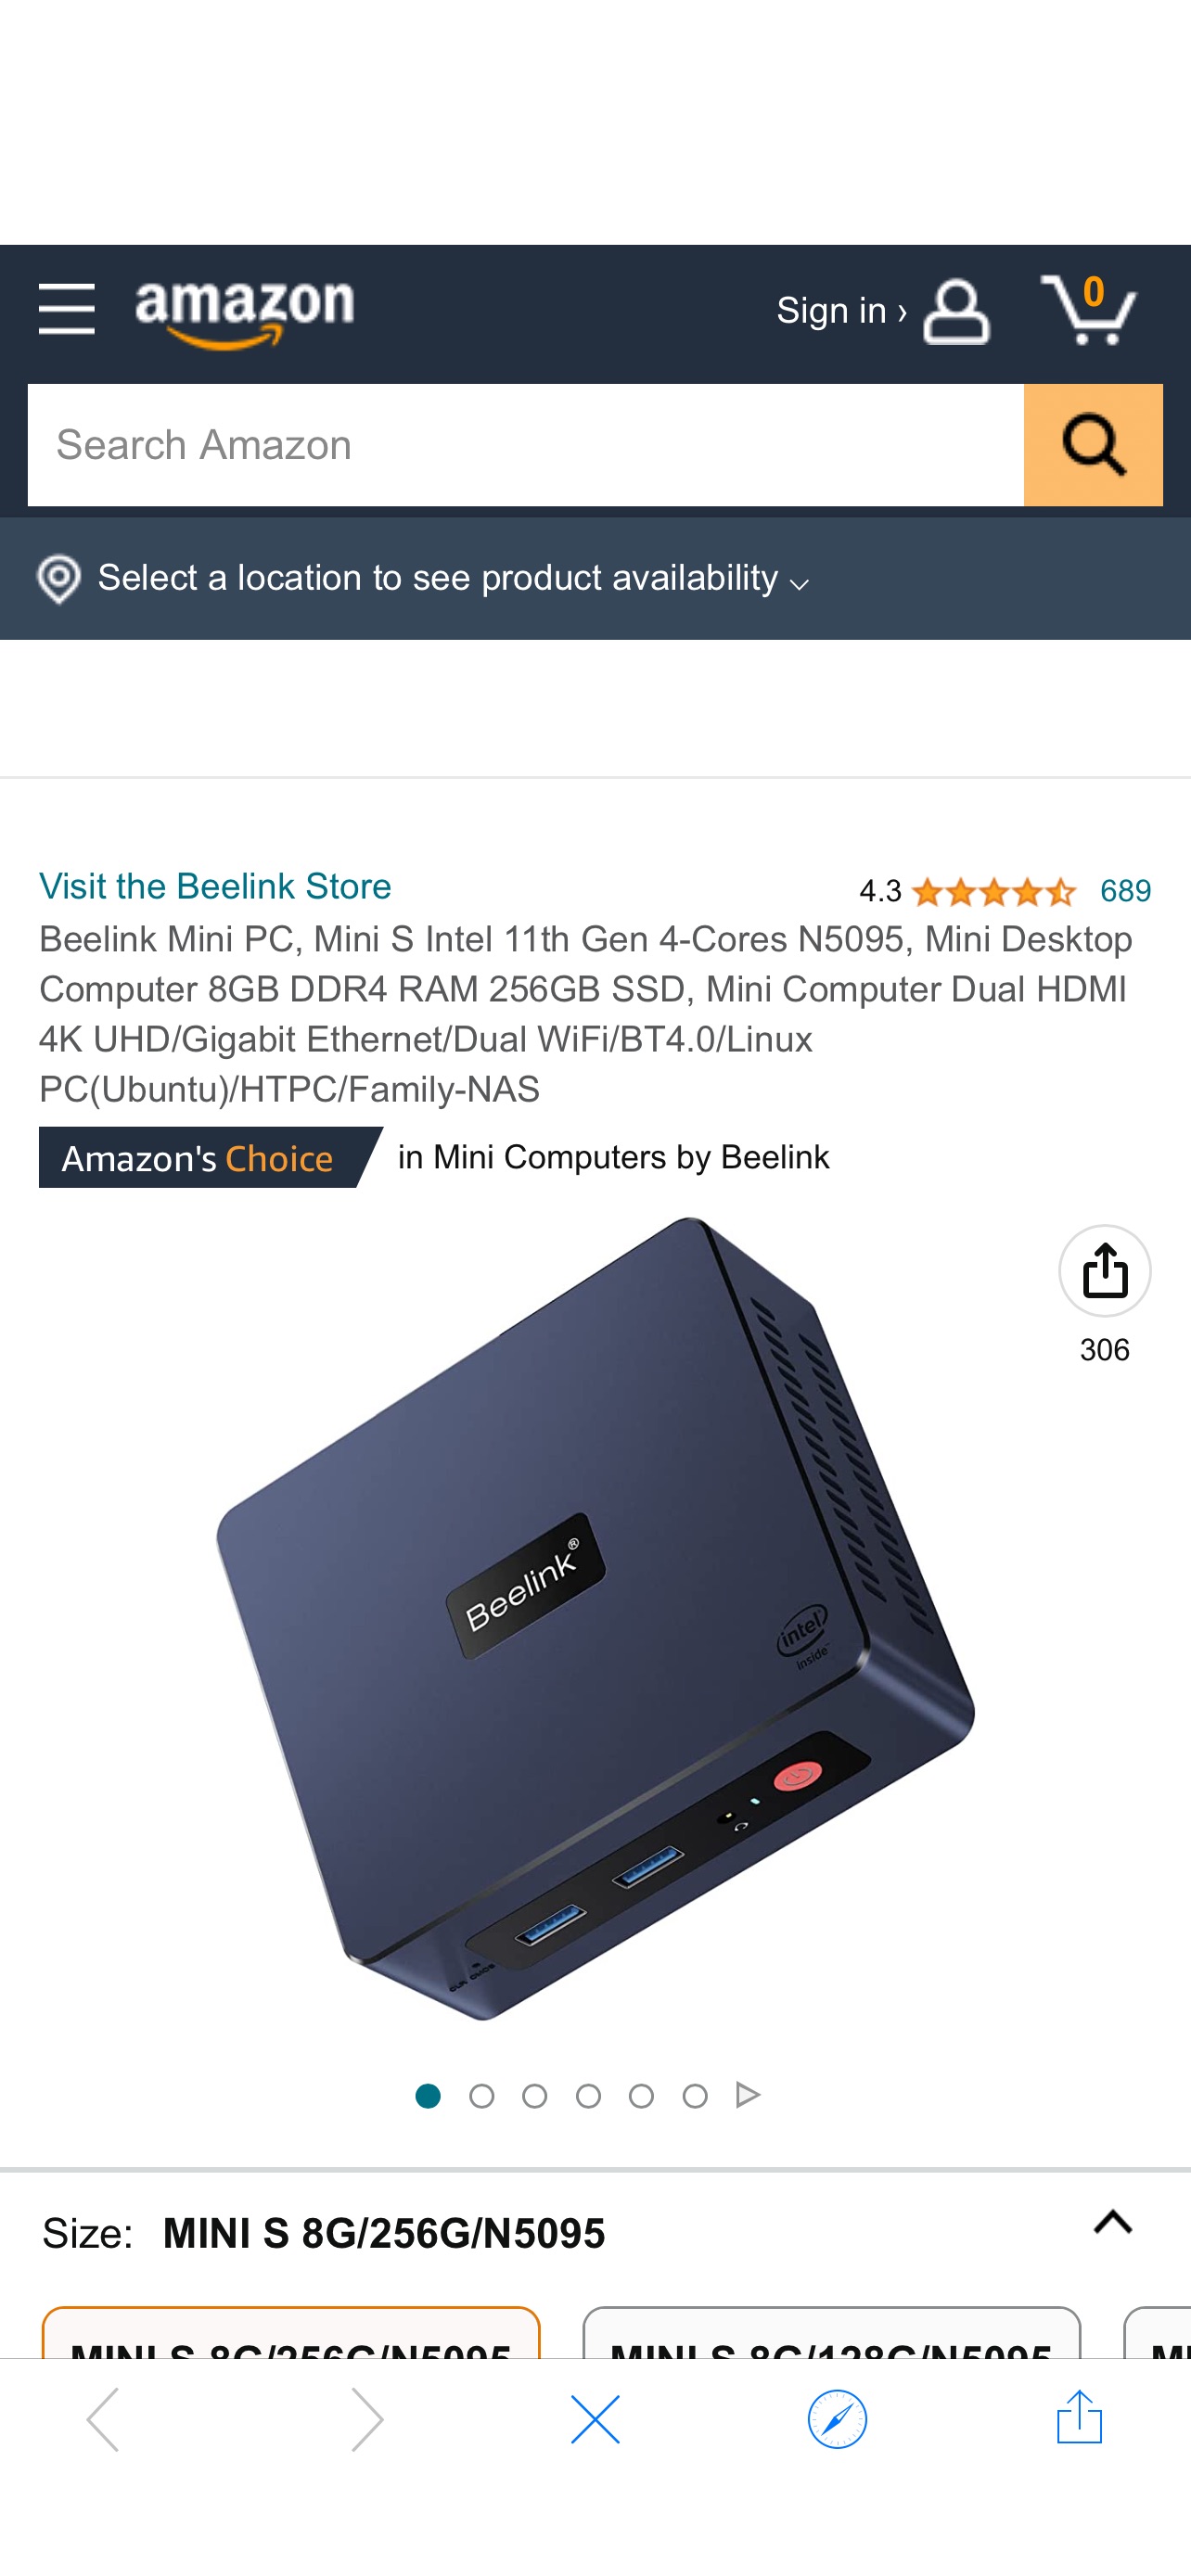 Amazon.com: Beelink Mini PC, Mini S Intel 11th Gen 4-Cores N5095, Mini Desktop Computer 8GB DDR4 RAM 256GB SSD, Mini Computer Dual HDMI 4K UHD/Gigabit Ethernet/Dual WiFi/BT4.0/Linux PC(Ubuntu)/HTPC/Family-NAS : Video Games